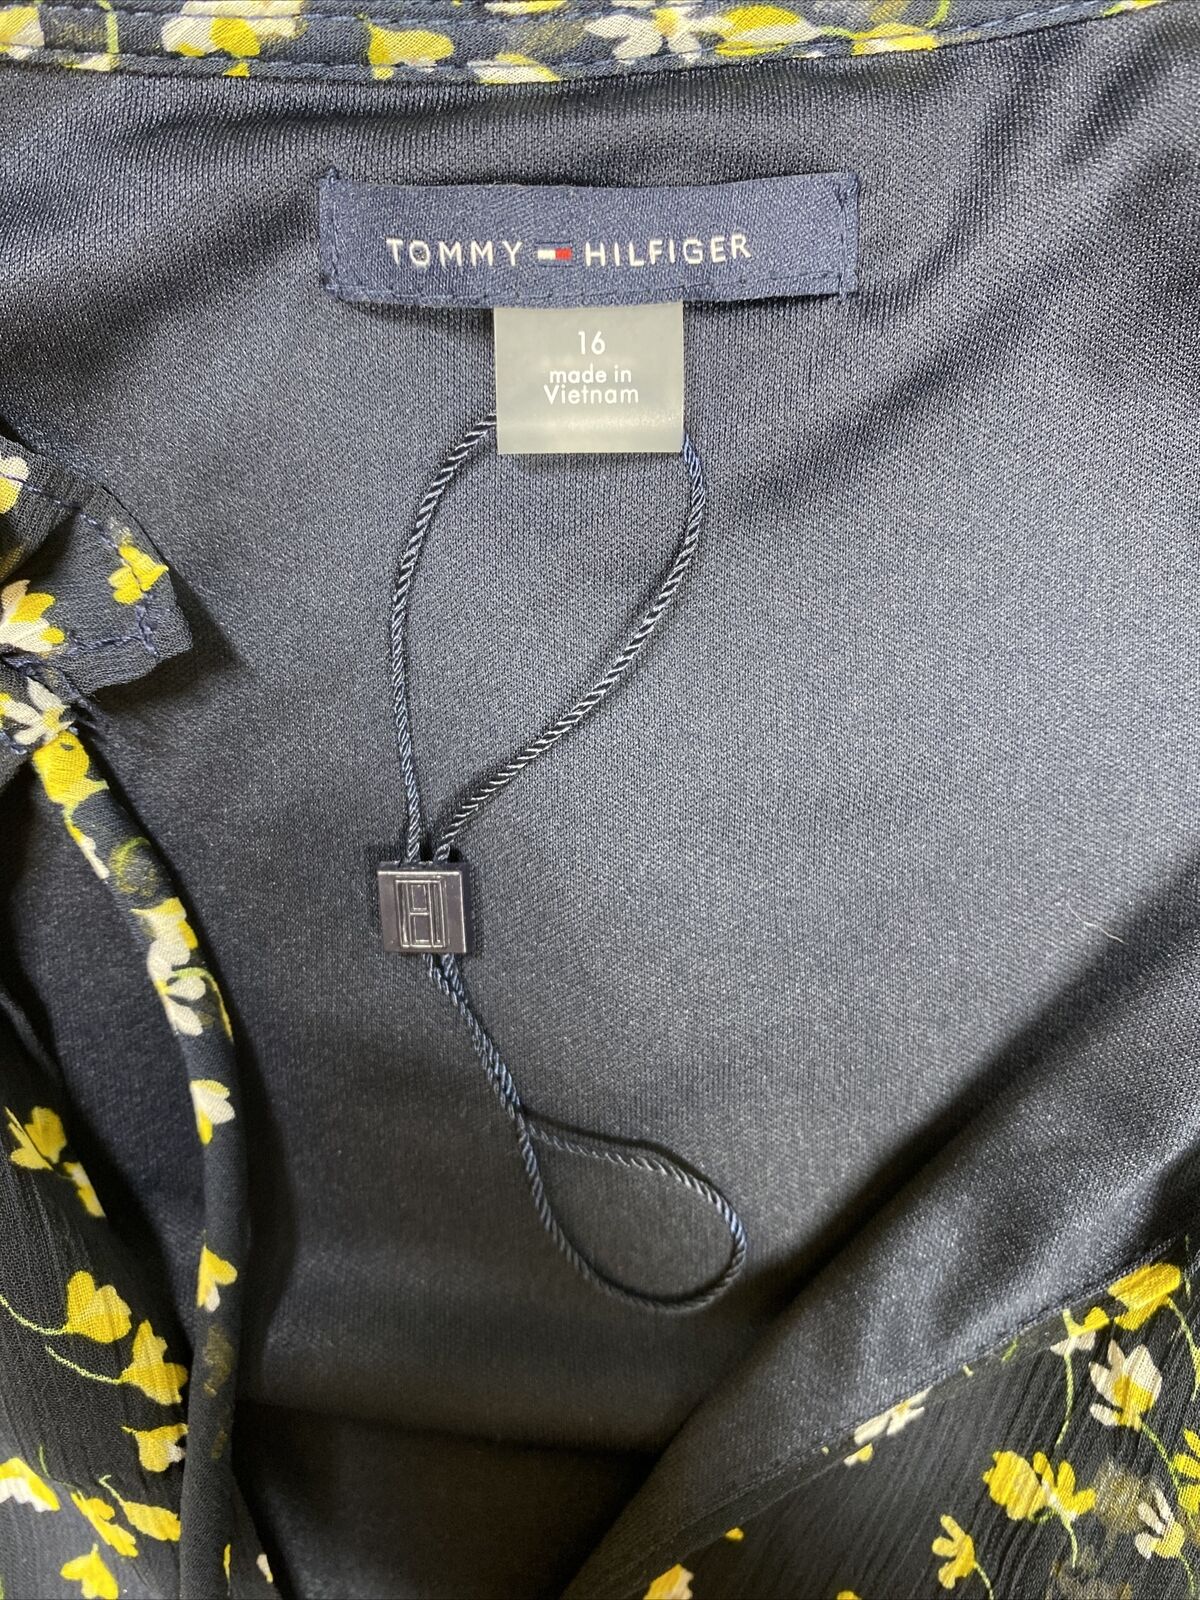 Tommy Hilfiger Women's Blue/Yellow Floral Shift Dress - 16